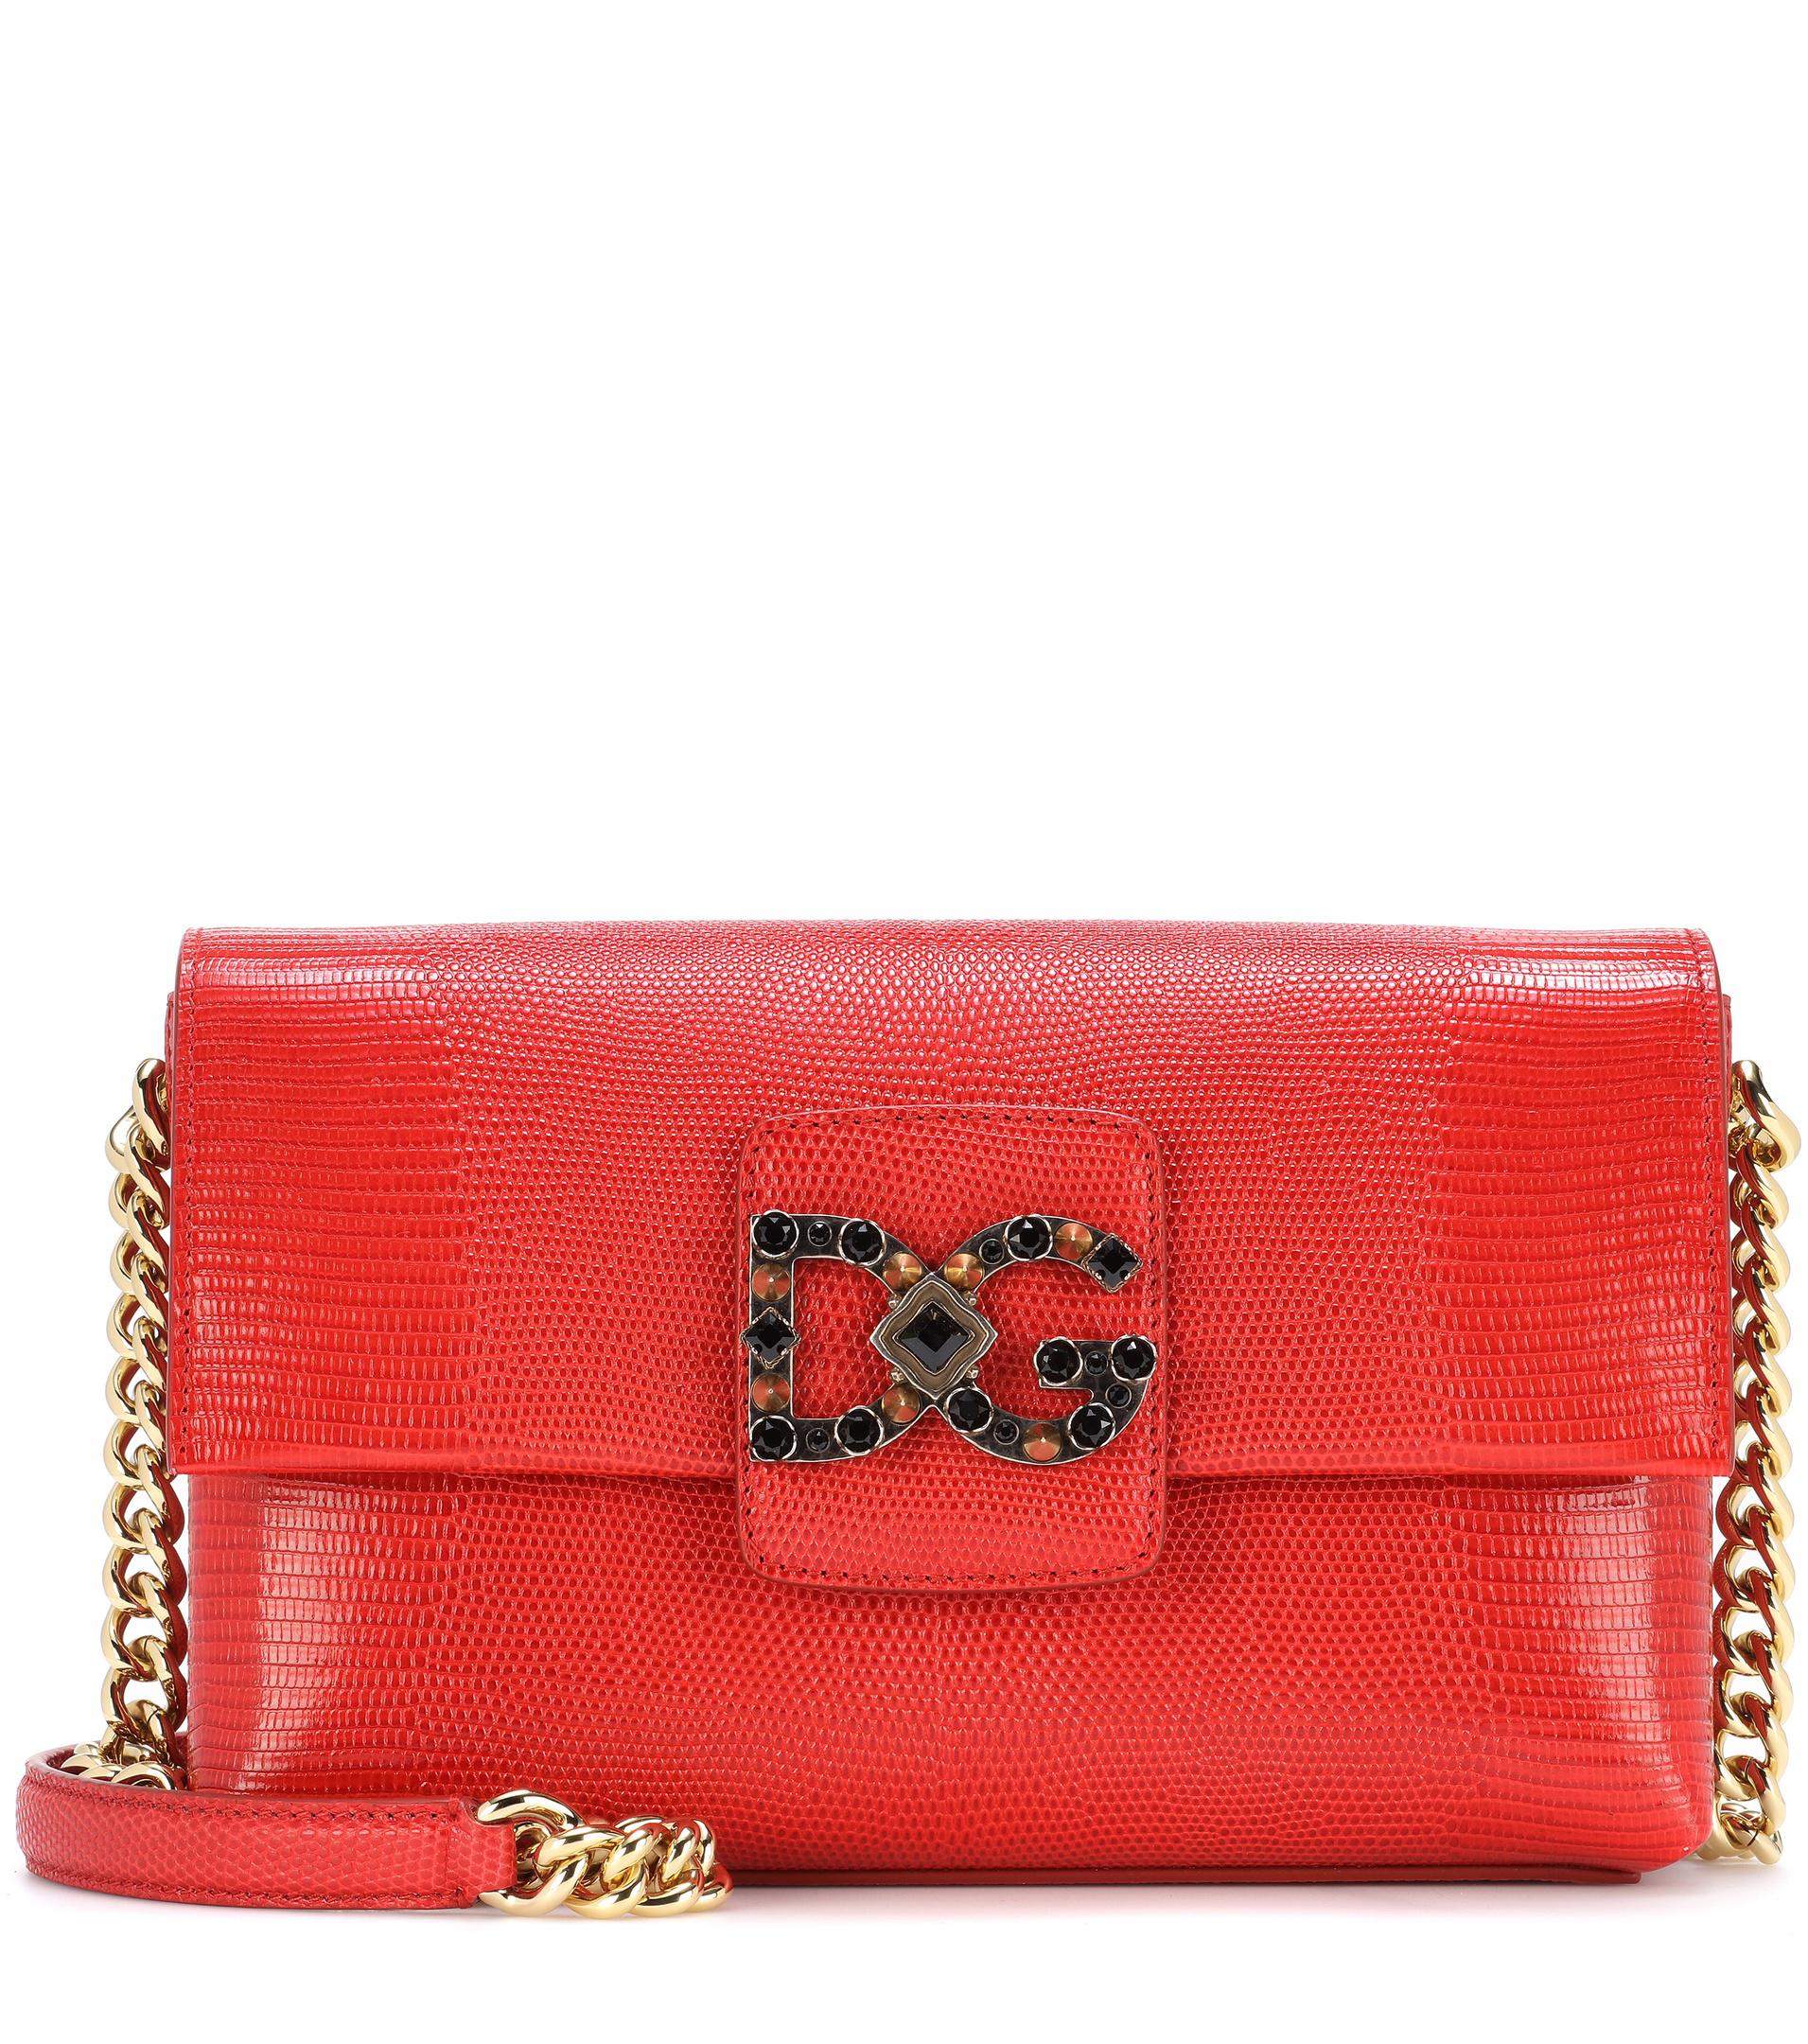 Dolce & Gabbana Dg Millennials Leather Shoulder Bag in Red - Lyst